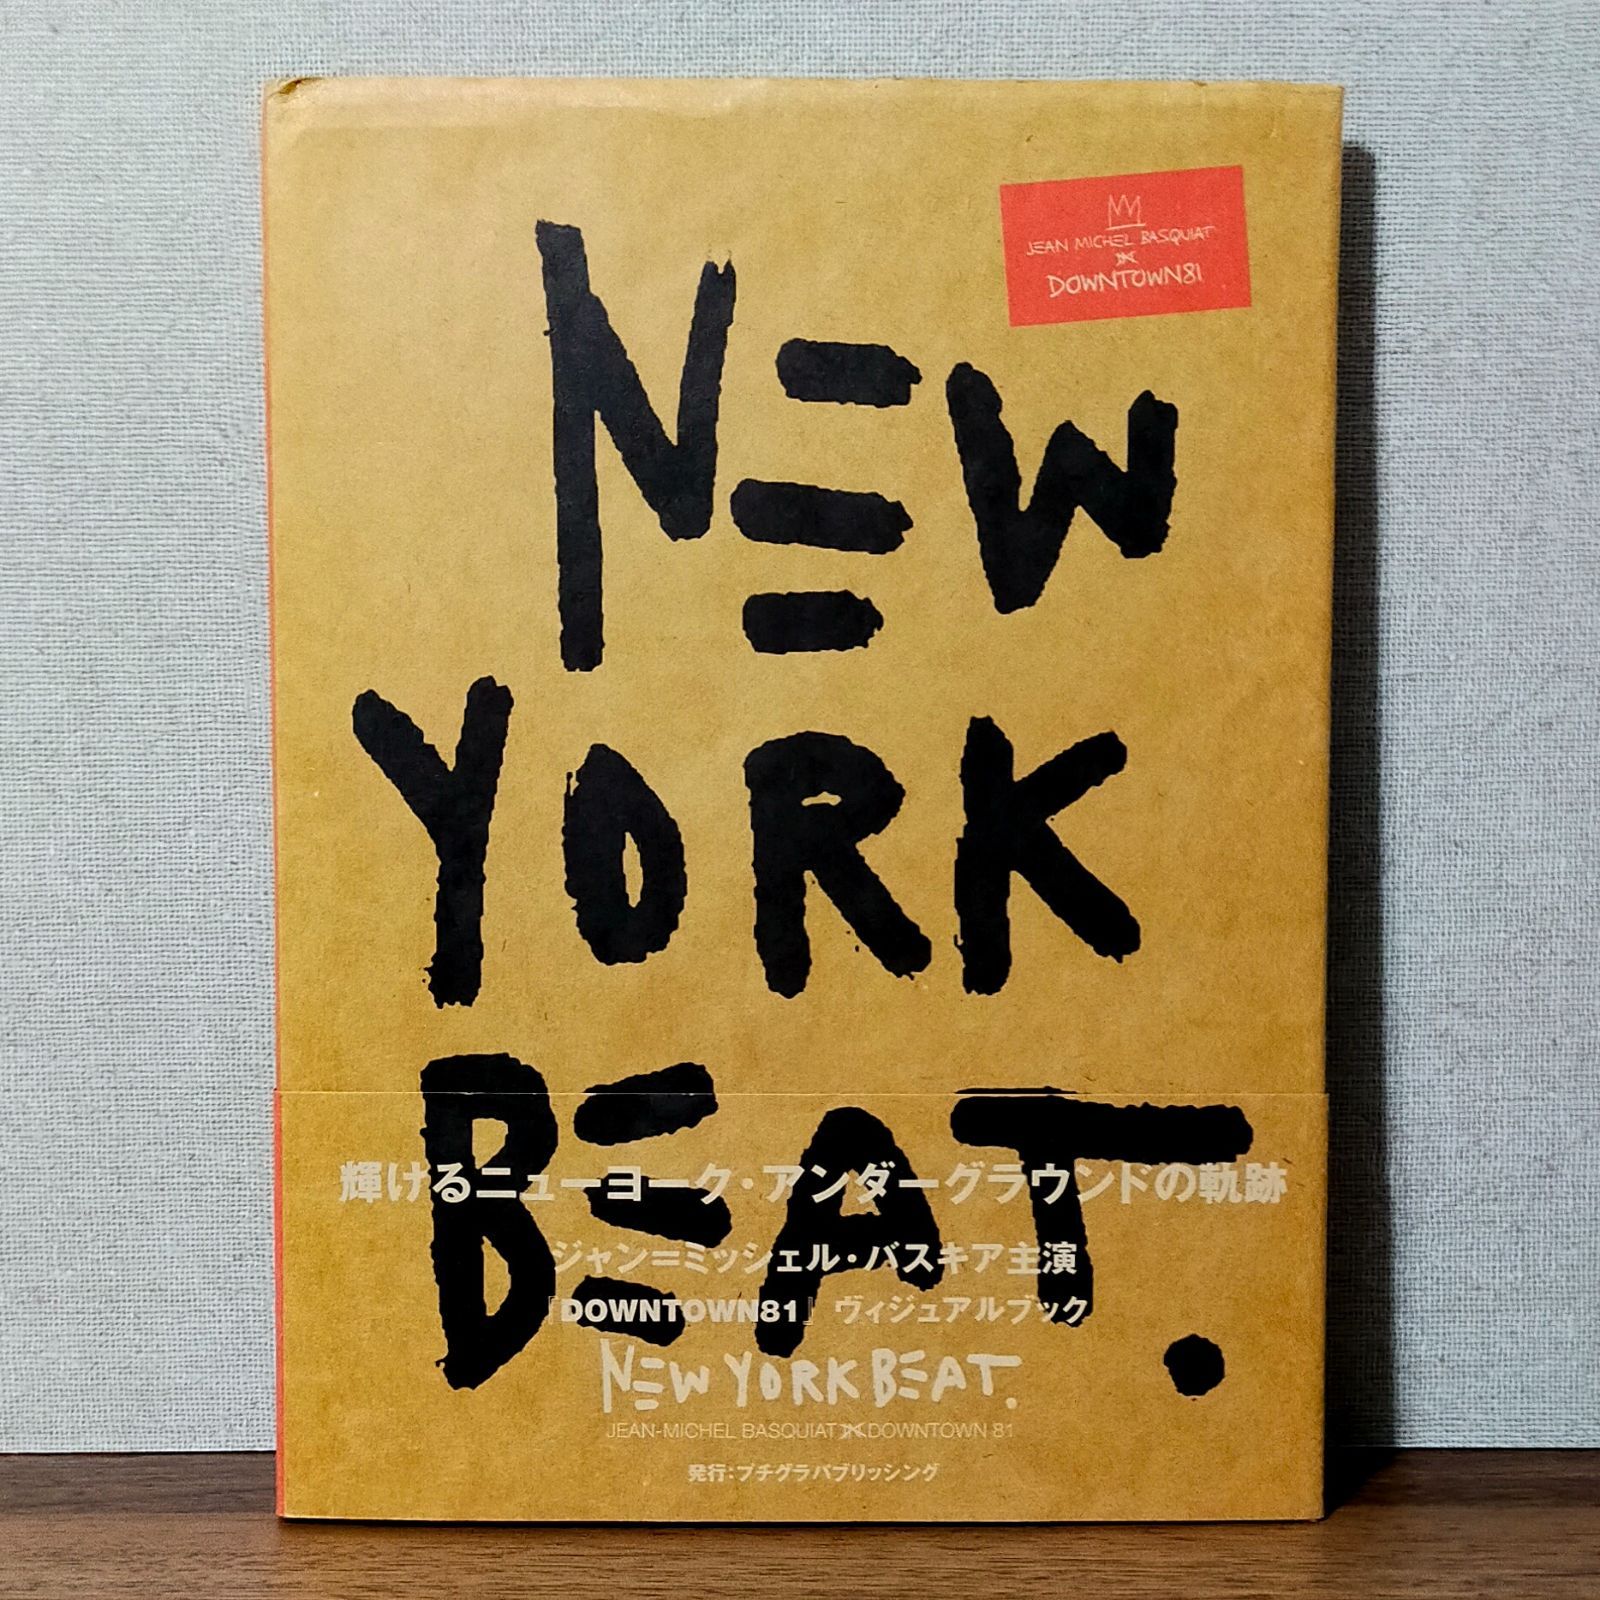 NEW YORK BEAT - DOWNTOWN81 ヴィジュアルブック - メルカリ